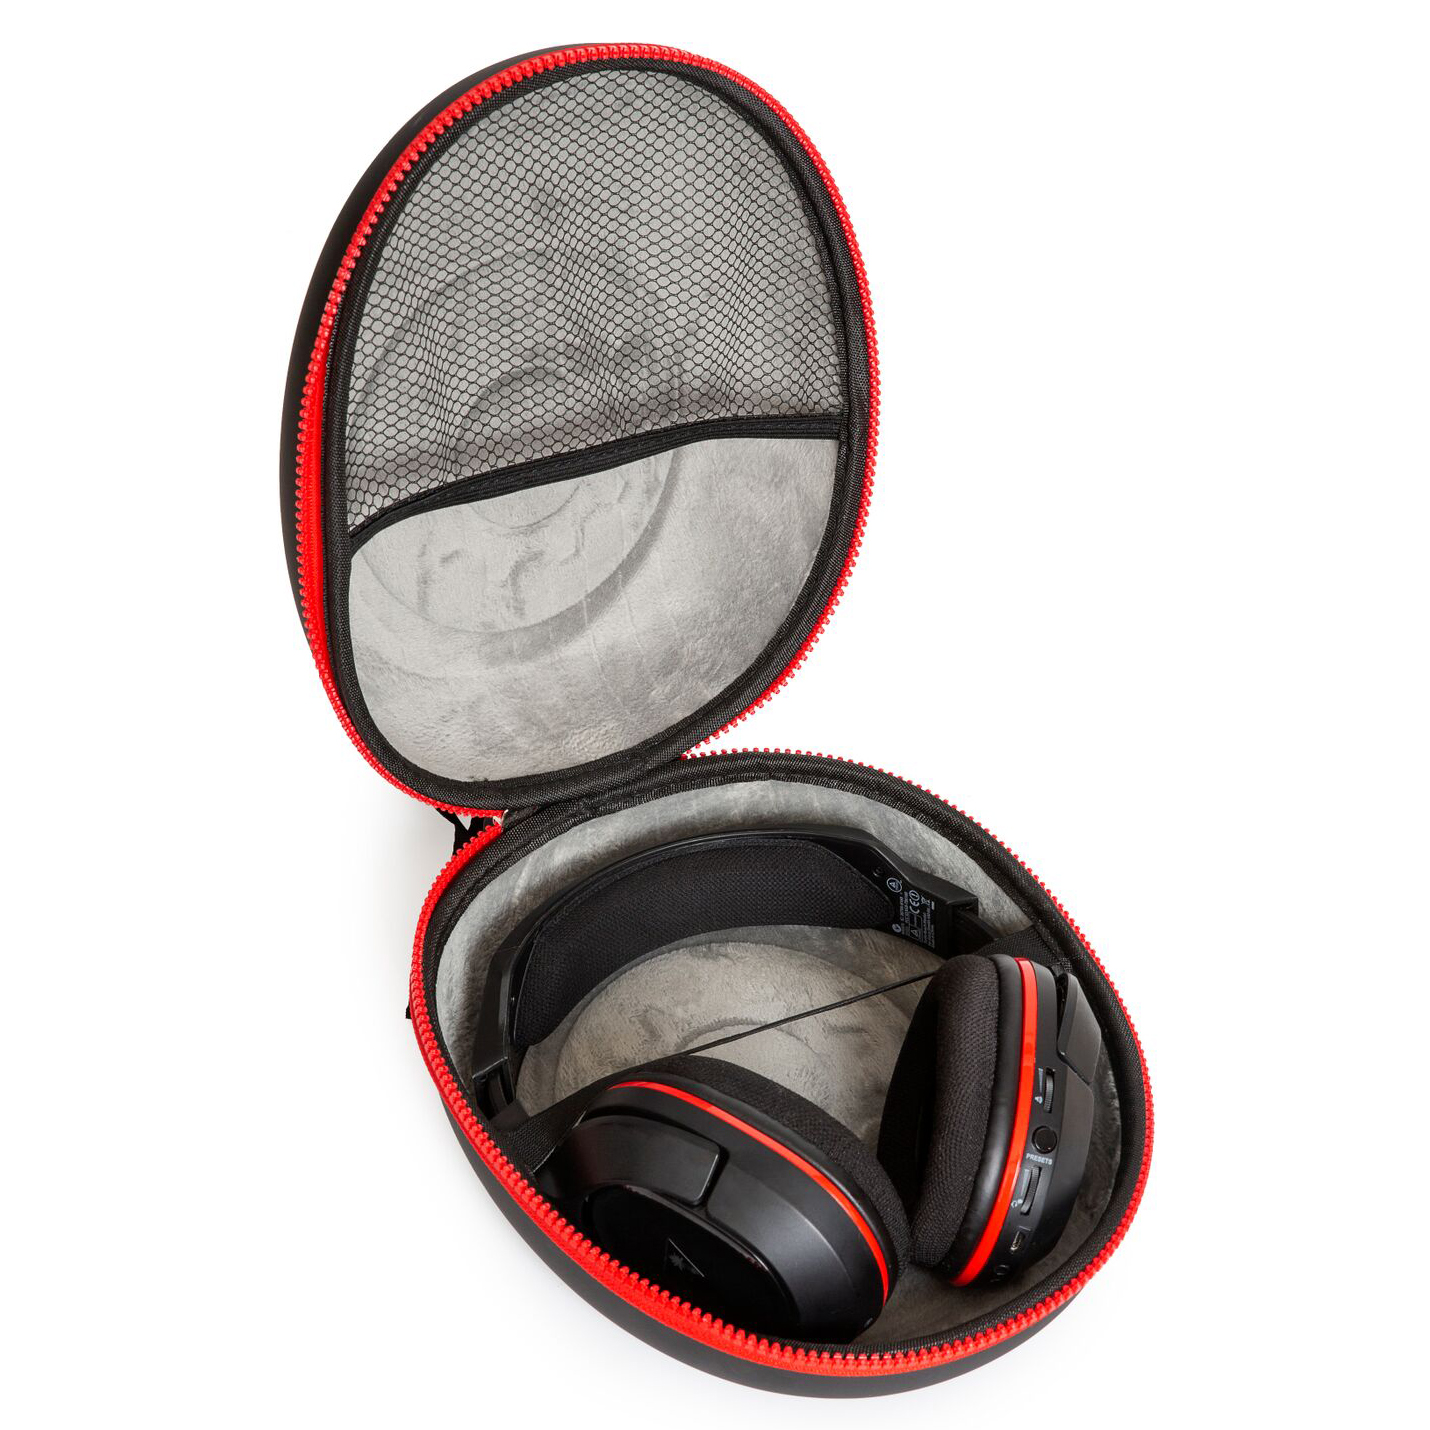 Deco Gear Hard Body Protective Full Size DJ Headphone Case for Sennheiser, JBL, Bose, Skullcandy, Sony, Audio-Technica, Bang & Olufsen, Beyerdynamic, Beats by Dre Headphones - image 5 of 8